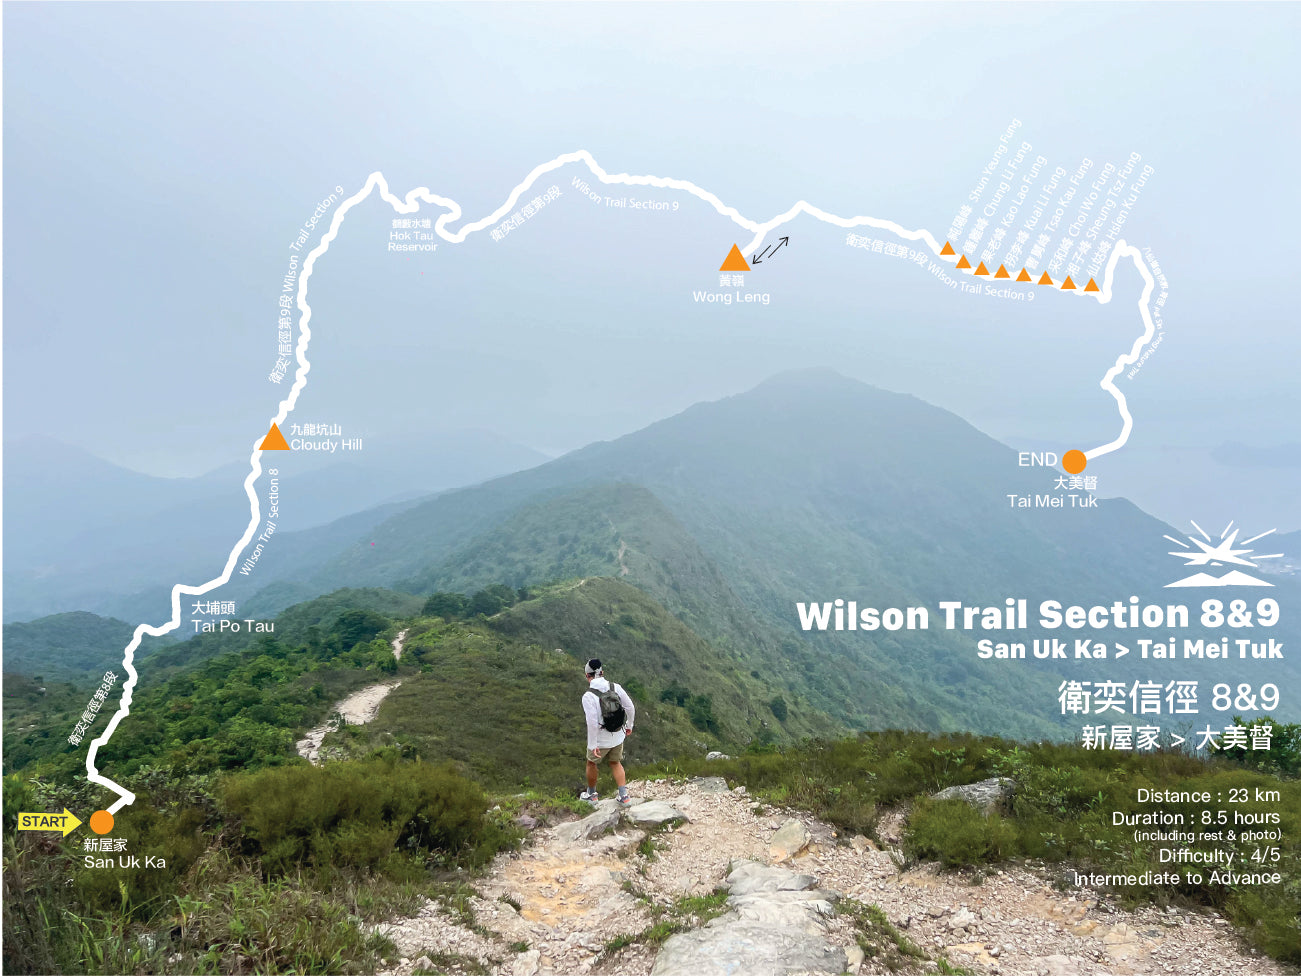 Wilson Trail Section 8&9 | San Uk Ka to Tai Mei Tuk